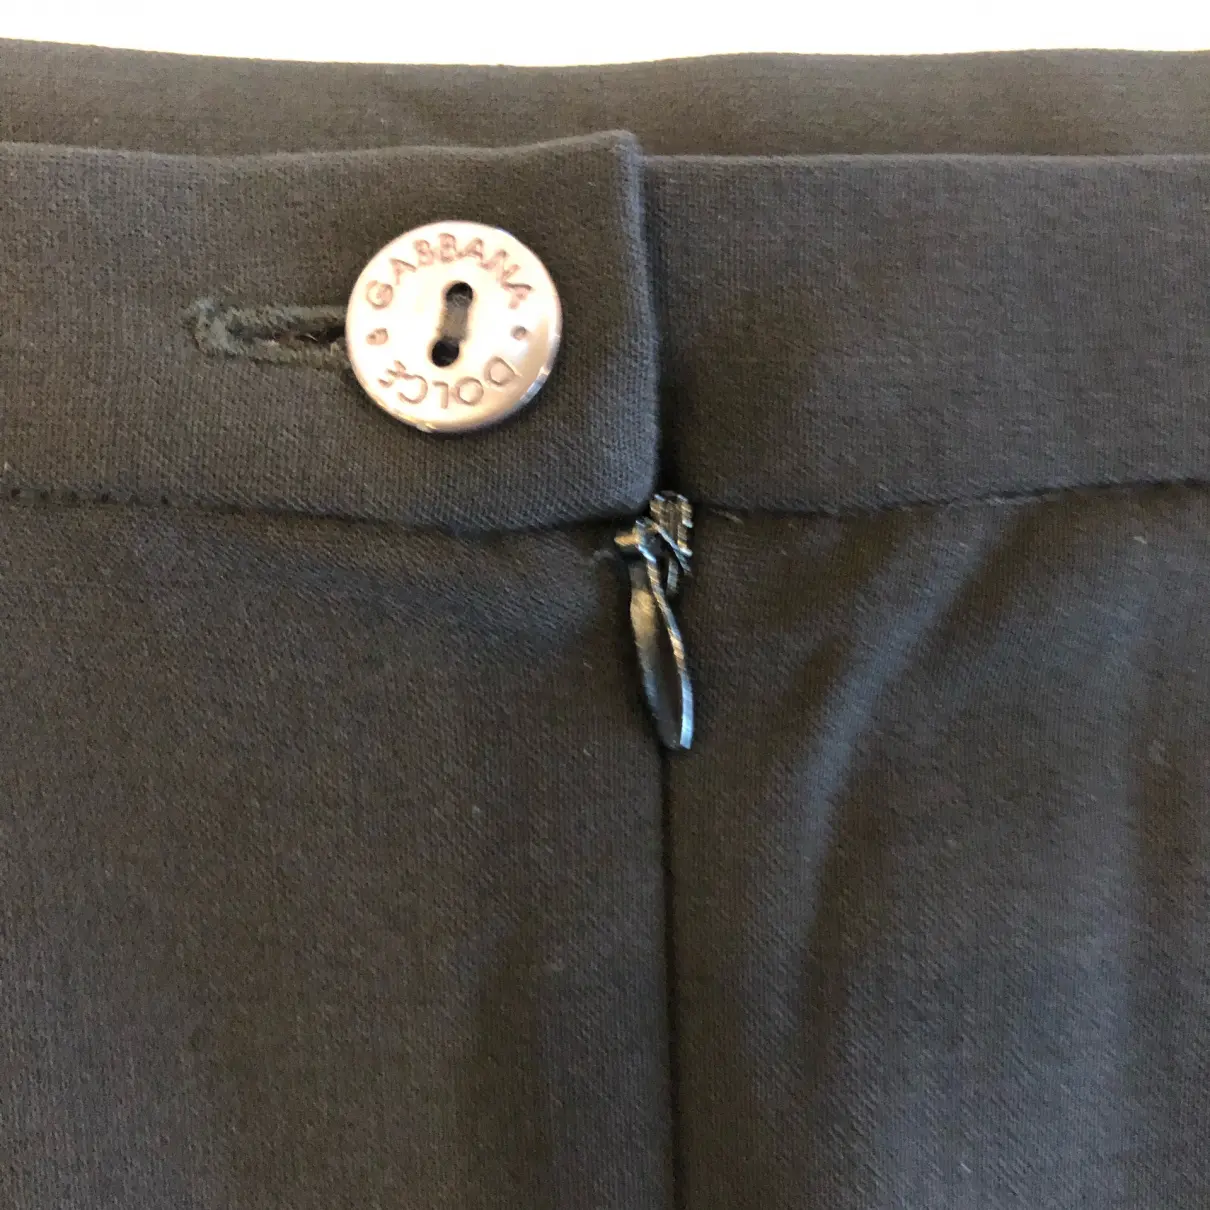 Wool mid-length skirt Dolce & Gabbana